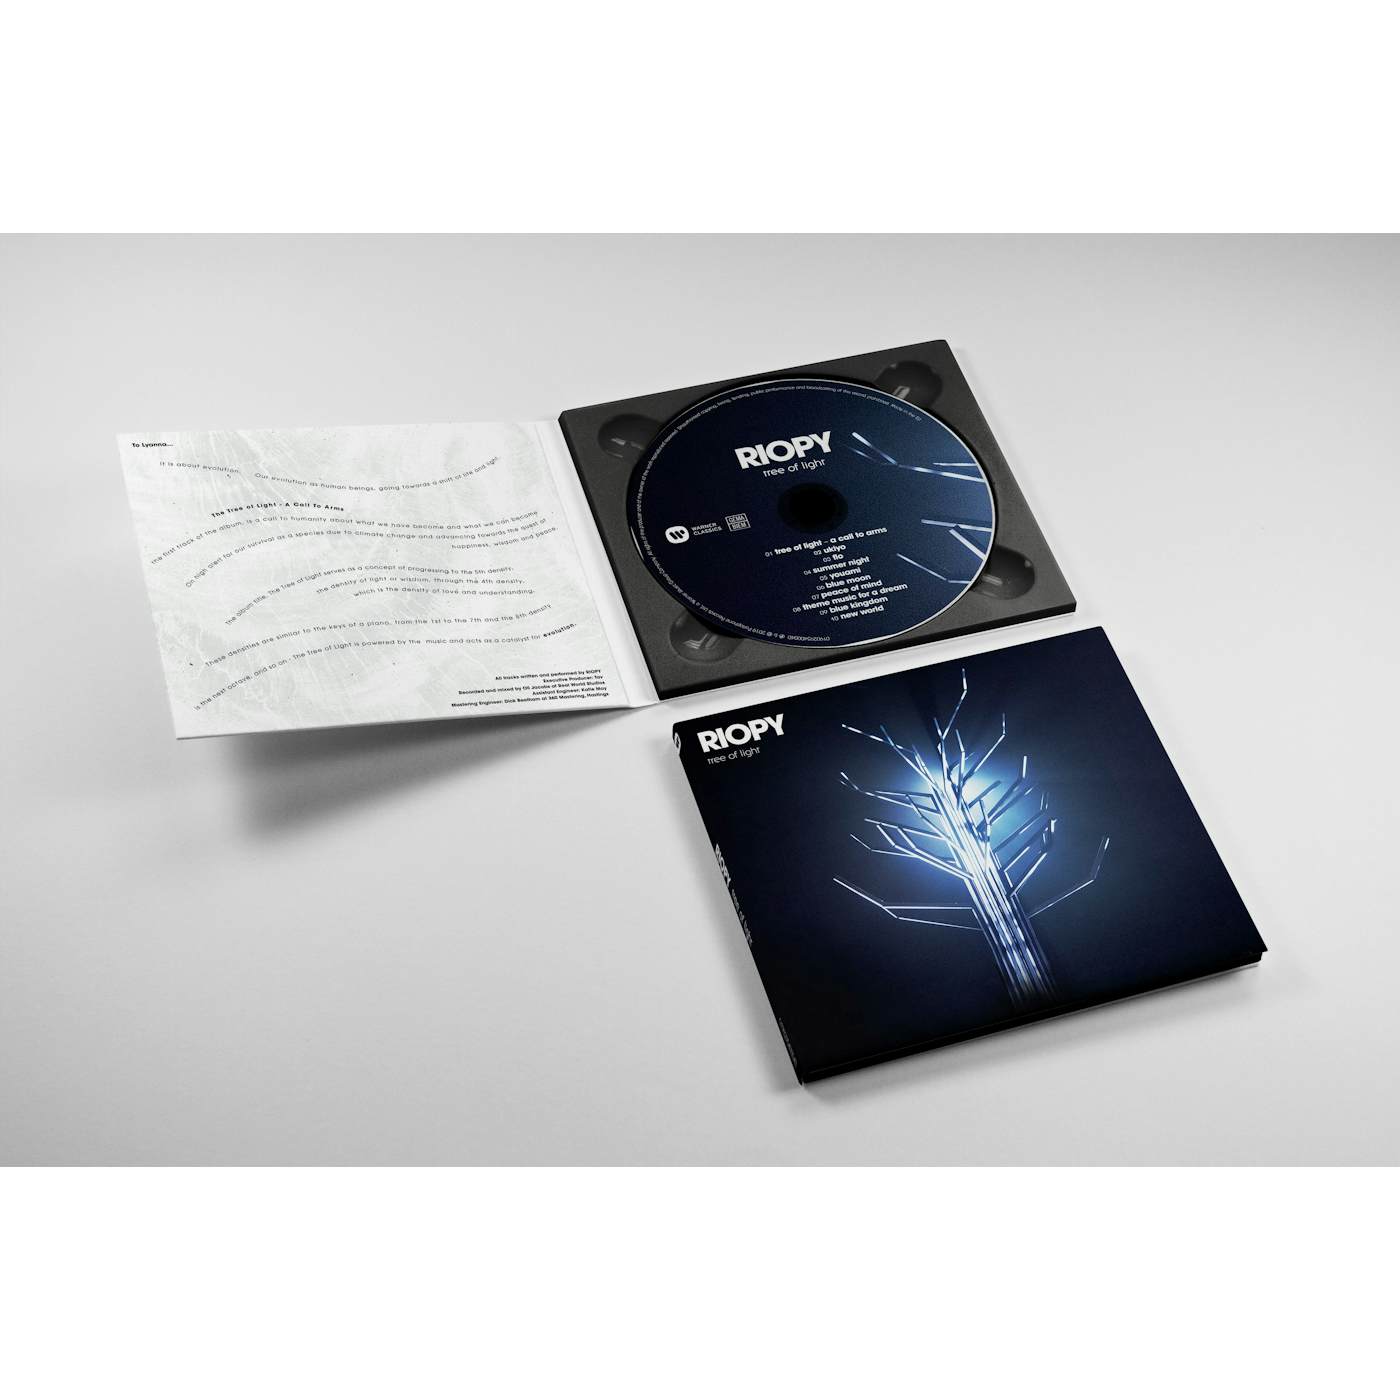 RIOPY Tree of Light (CD)